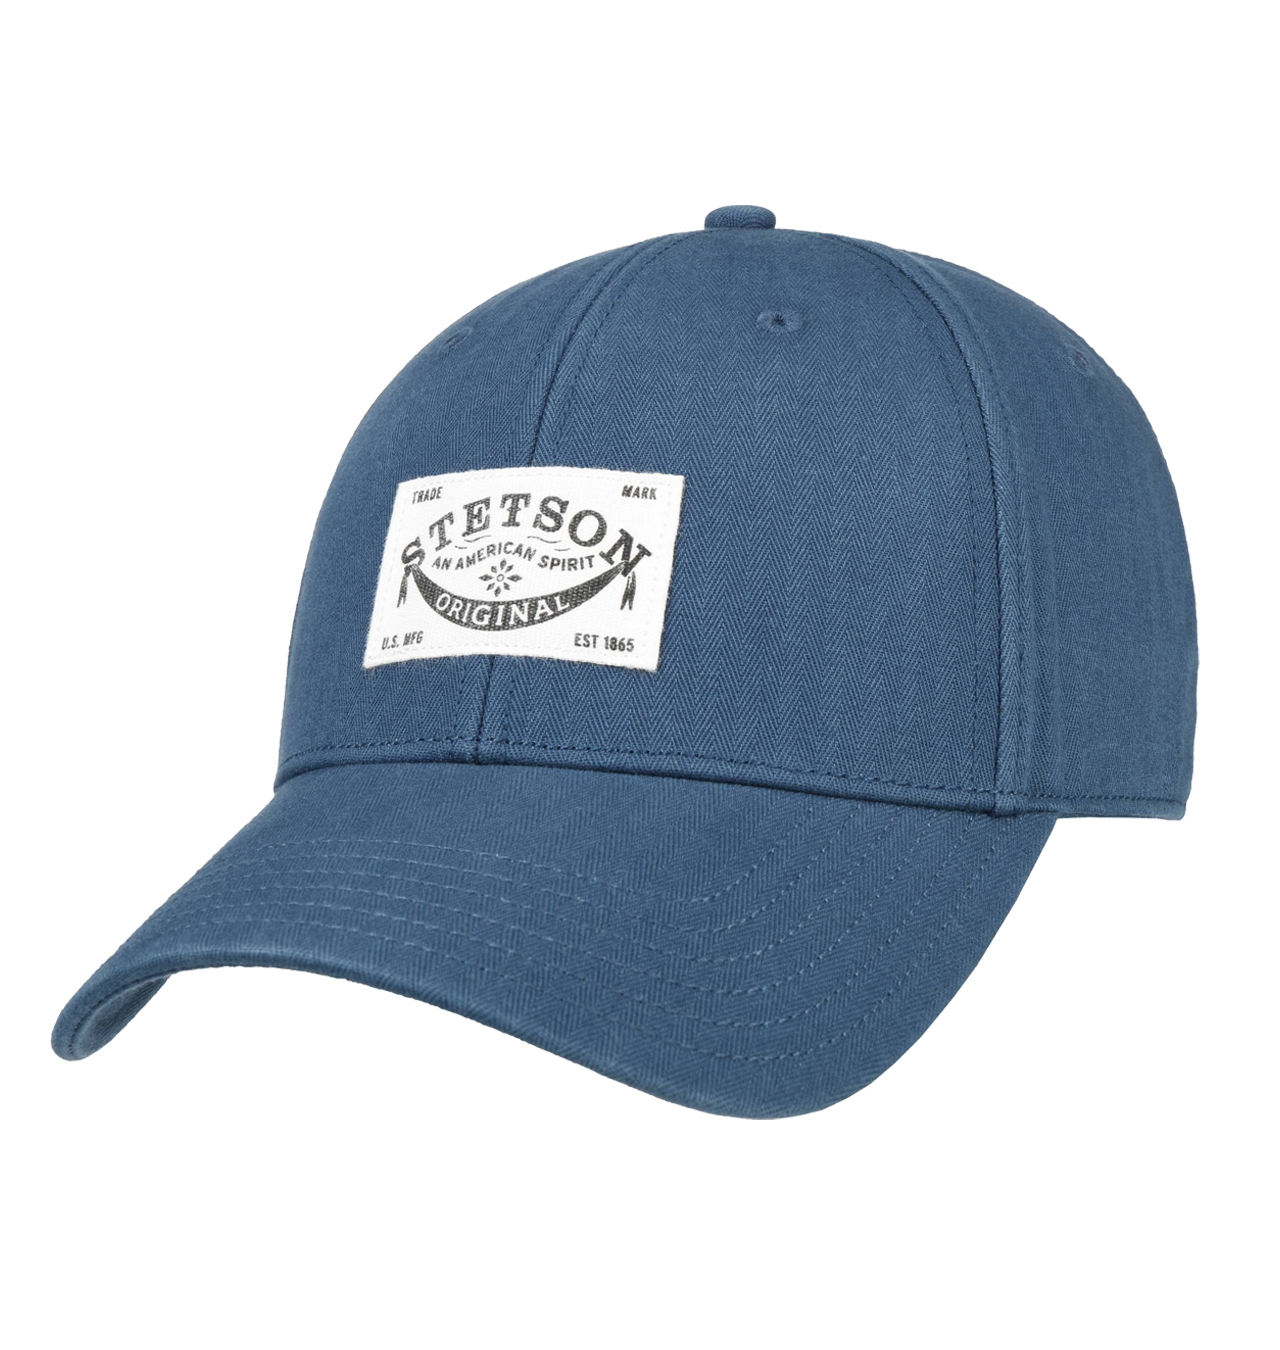 Stetson - American Spirit Cotton Cap (UV Protection) - Blue